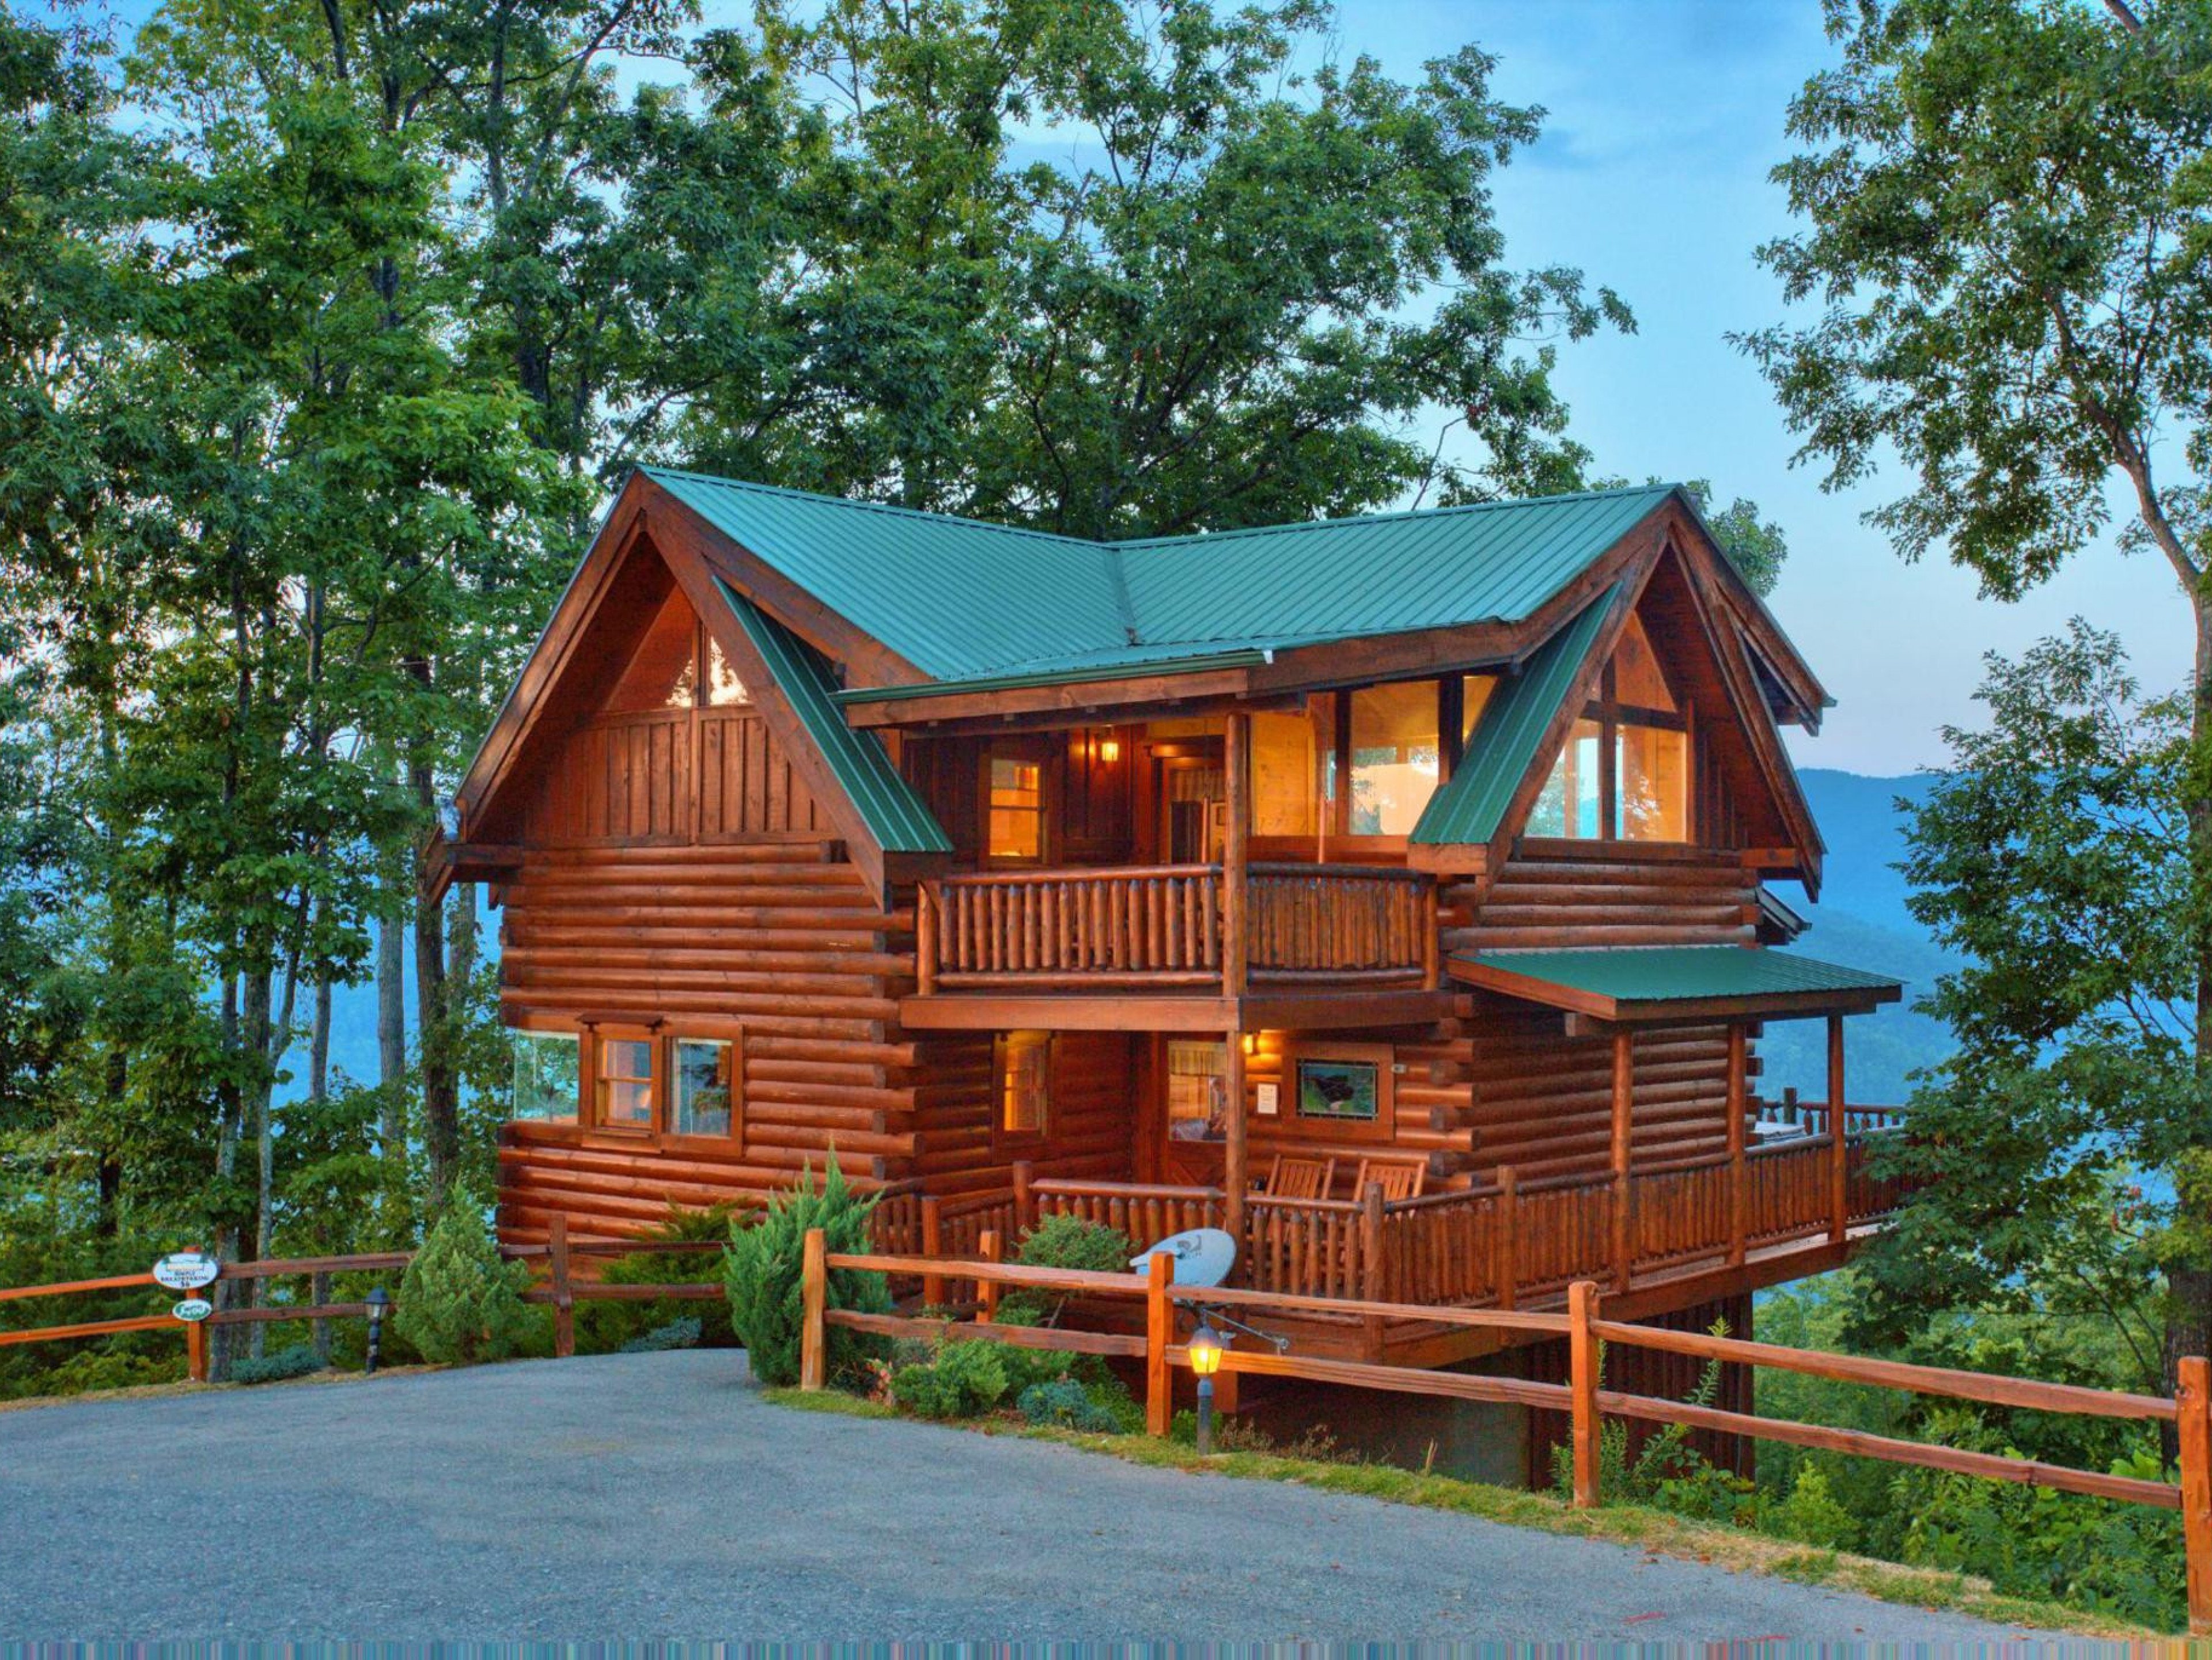 Wears Valley 14 vacation cabin rentals